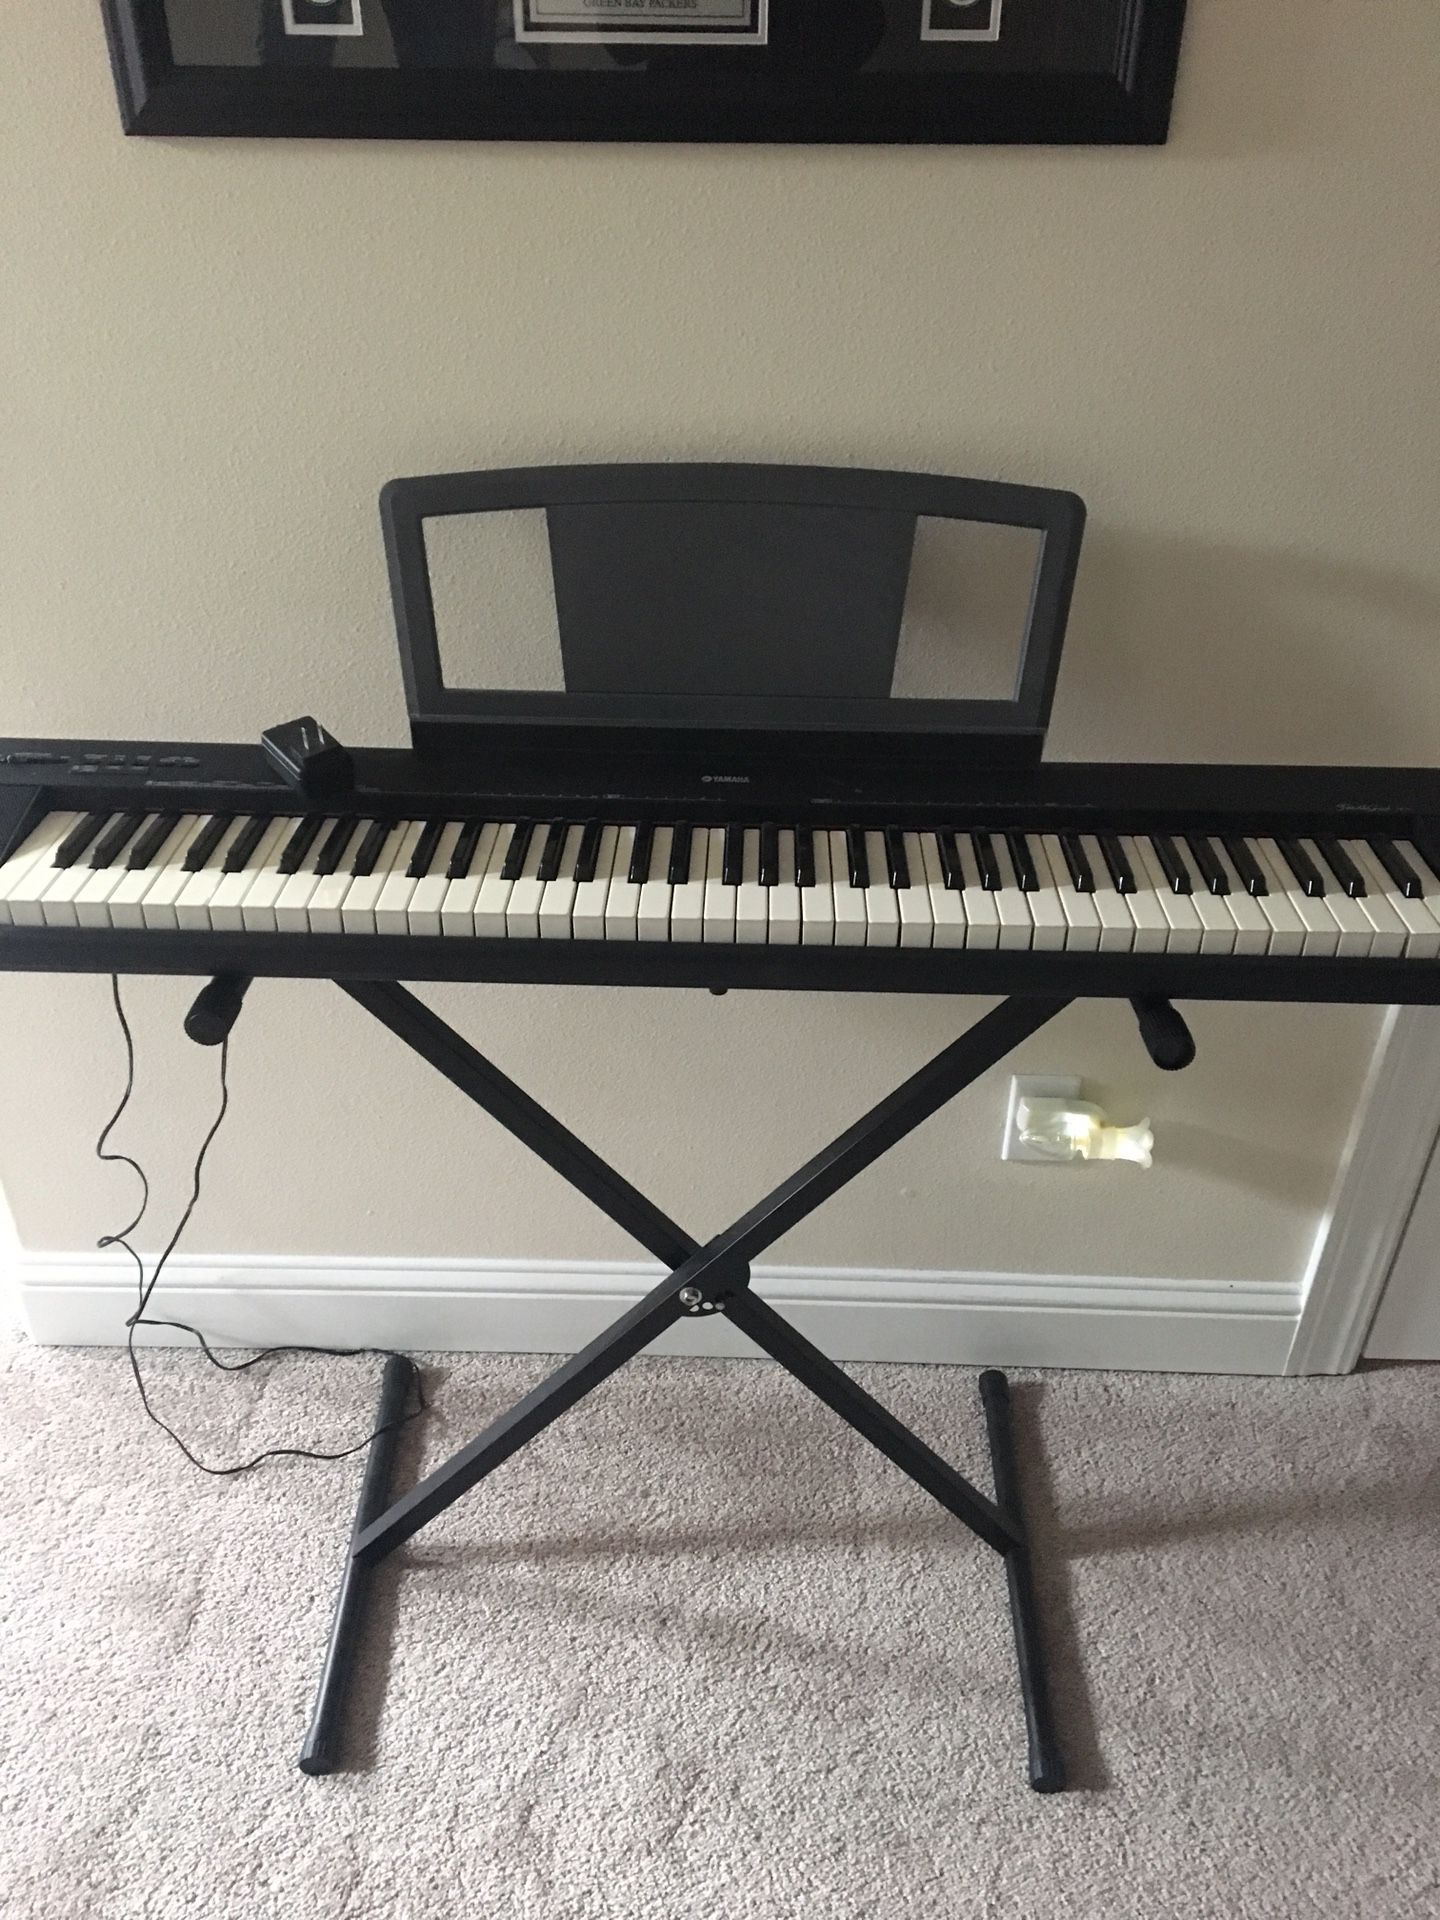 Yamaha NP-30/YNP-25 Digital Keyboard with Casio Stand